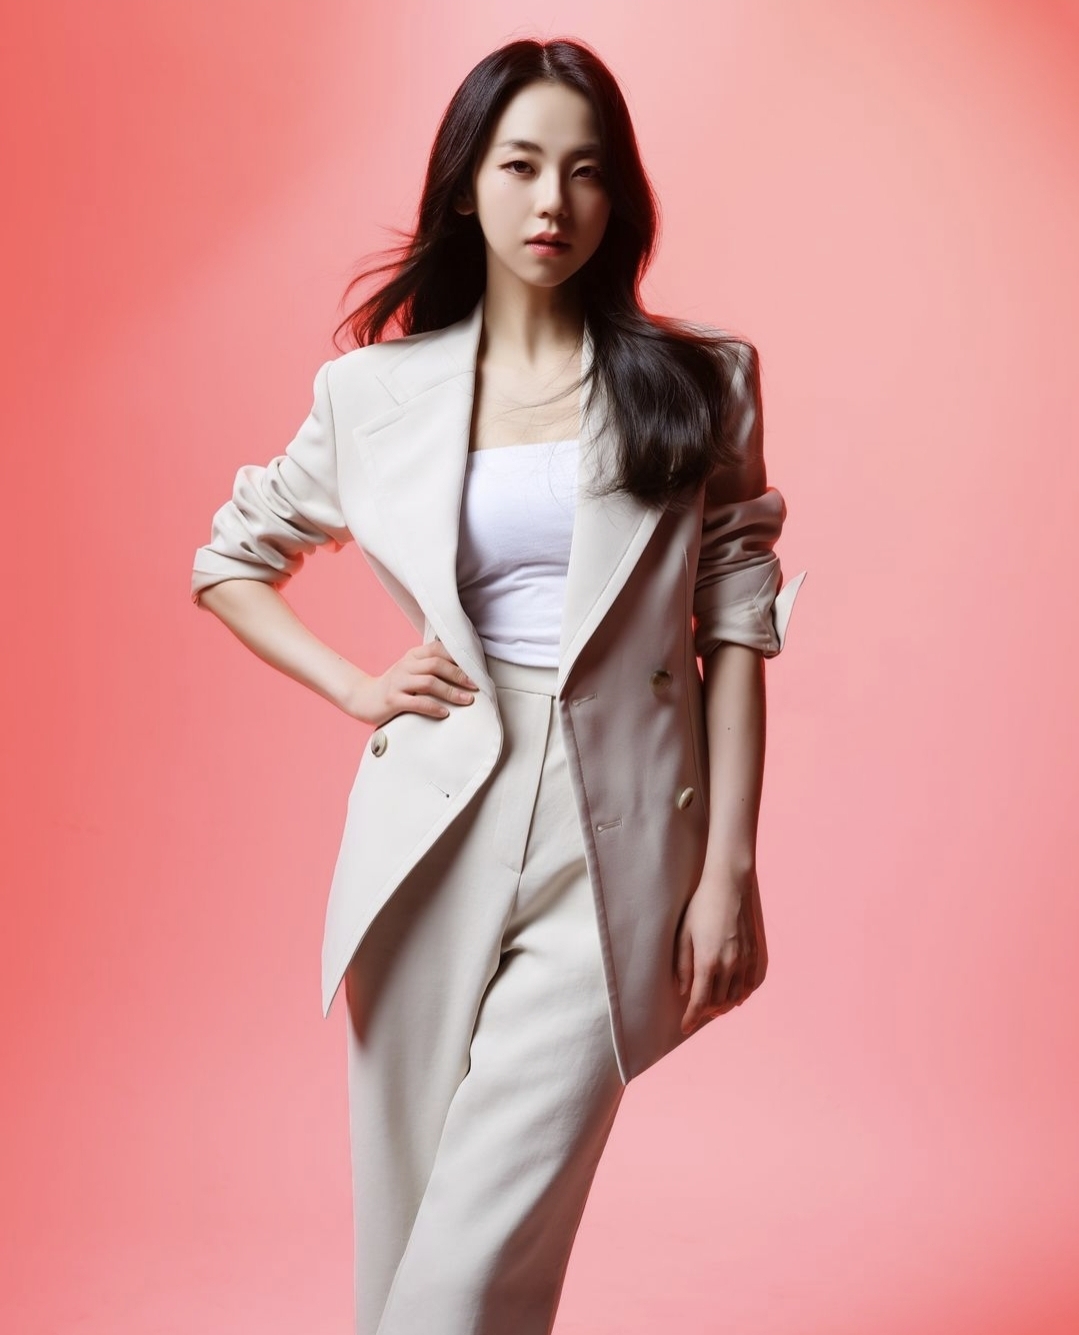 Sohee Ahn in a pictorial for Cine21 magazine